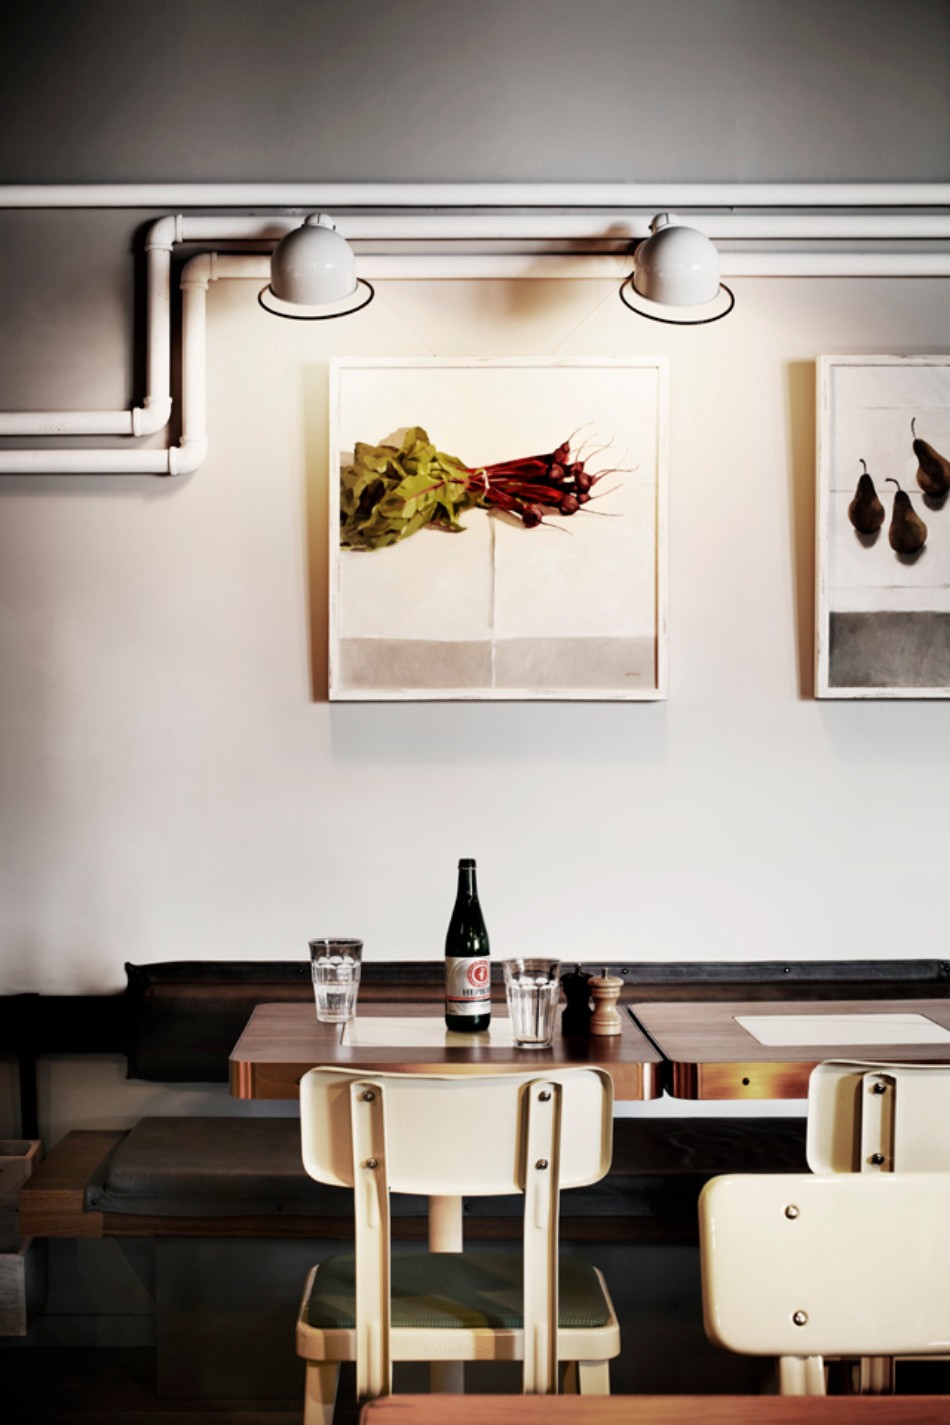 Restaurants We Love Cozy Dining Area Designed by Hassell Studio | www.bocadolobo.com #interiordesign #restaurants #roomdesign #diningroom #thediningroom #hassell #topinteriordesigners #famousinteriordesigners #interiordesigners #moderndiningtables #moderndiningchairs #diningchairs @moderndiningtables